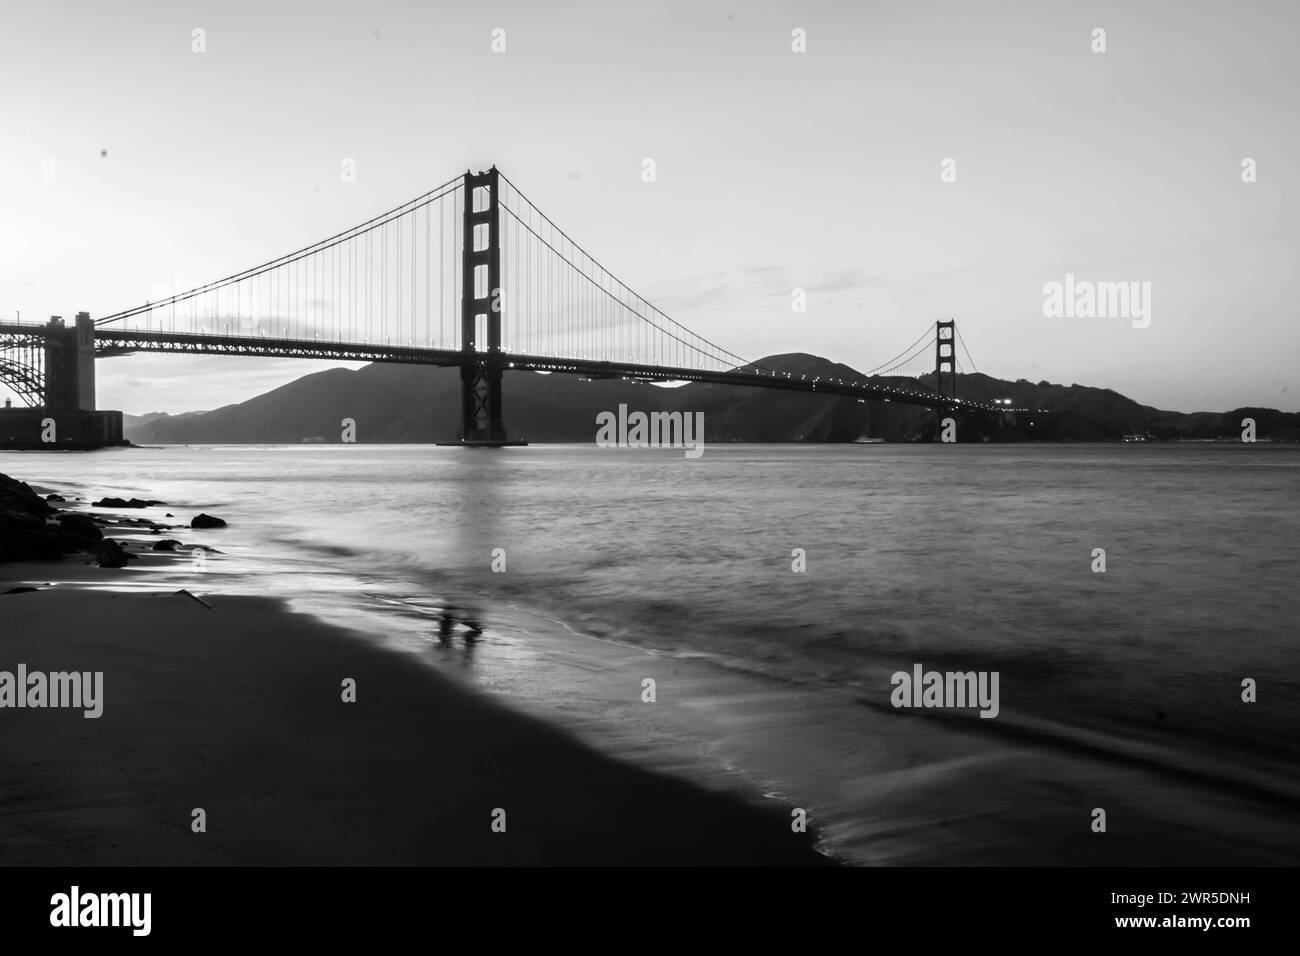 Photograph of the famous Golden Gate Bridge in San Francisco Stock Photo